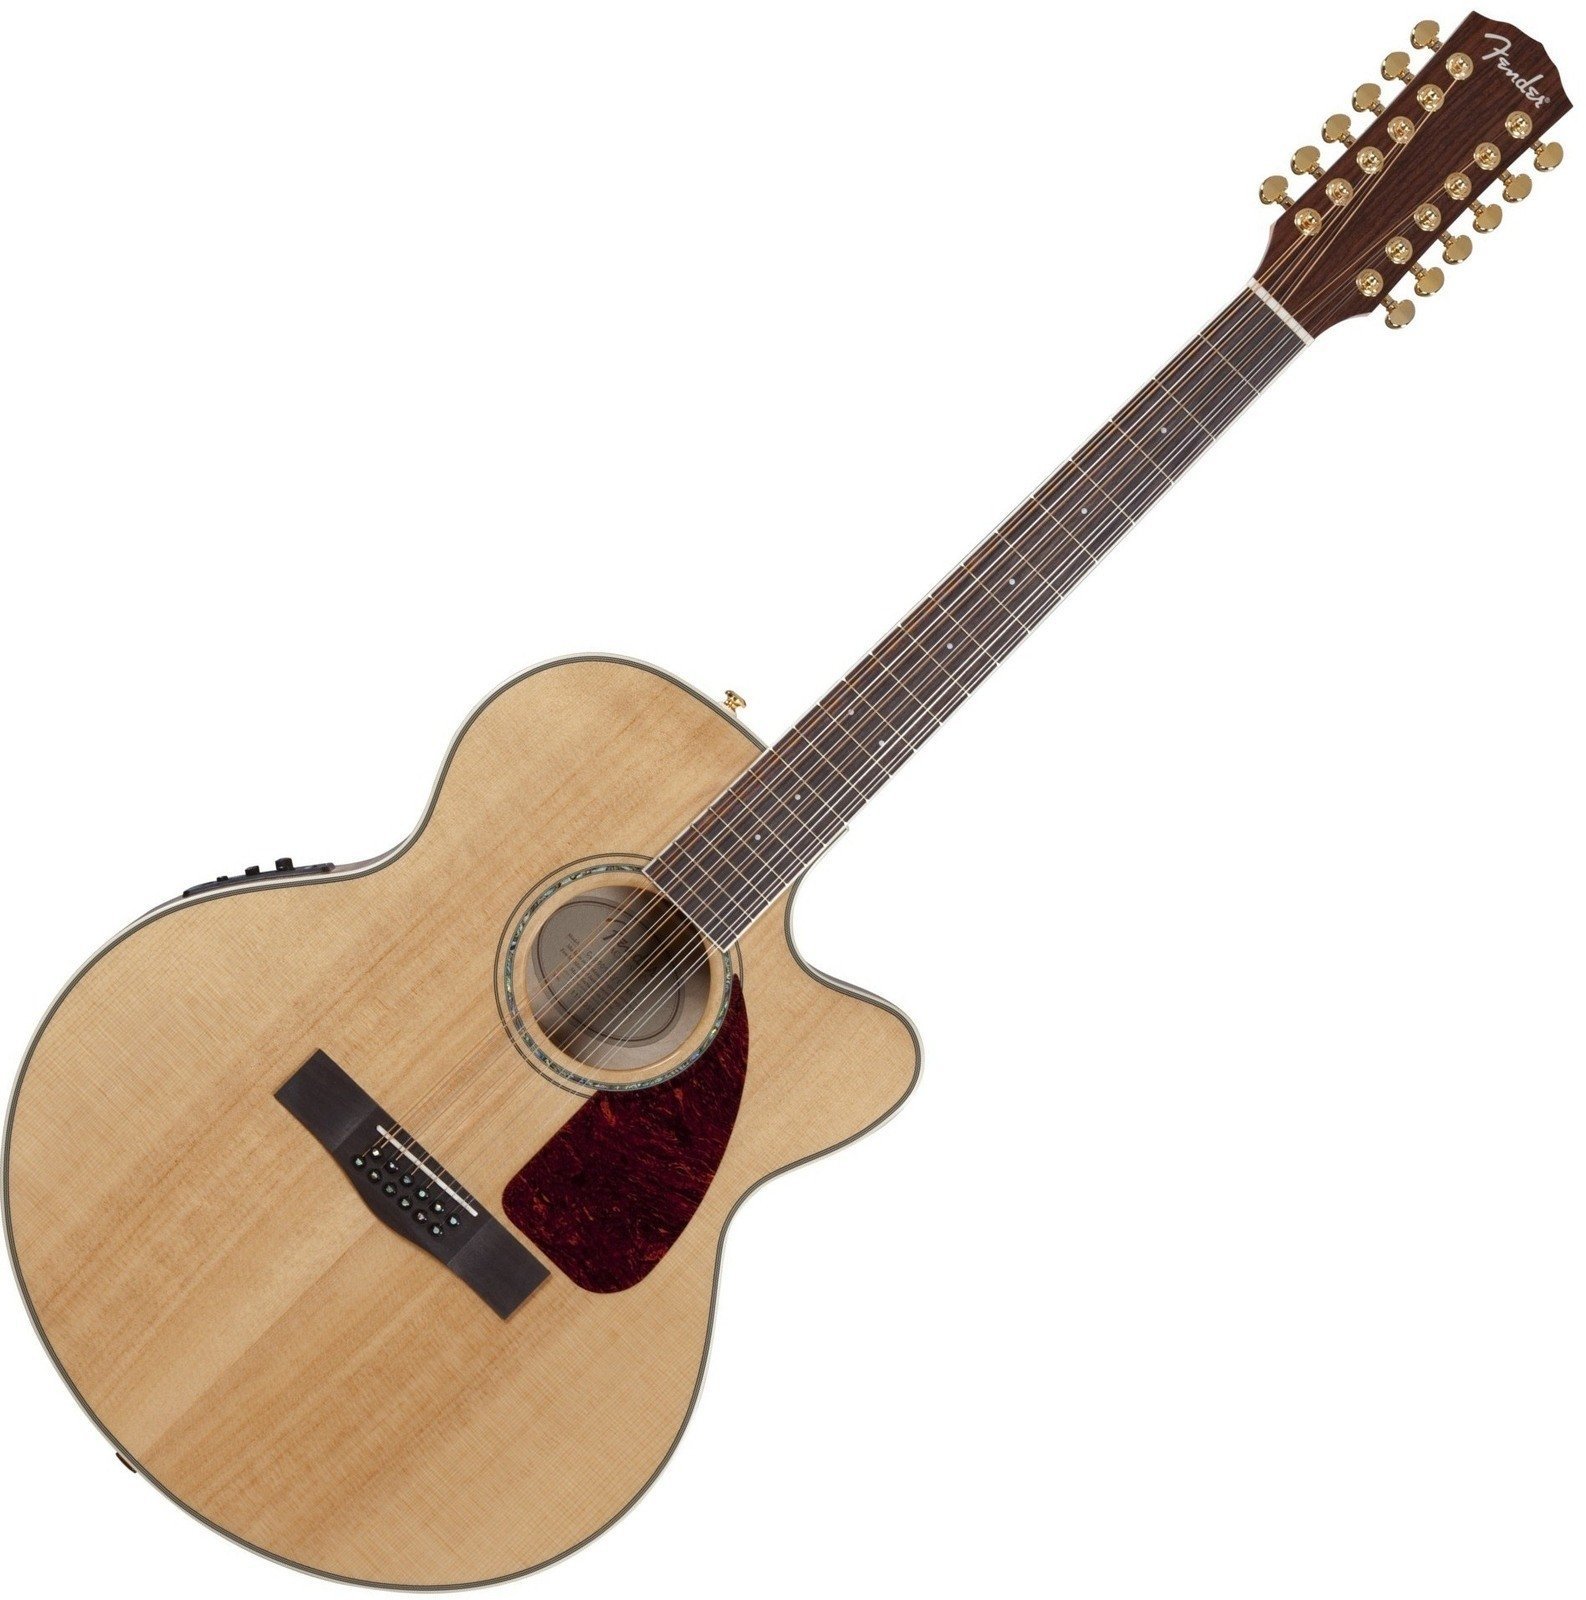 12-saitige Elektro-Akustikgitarre Fender CJ290 SCE 12 Natural